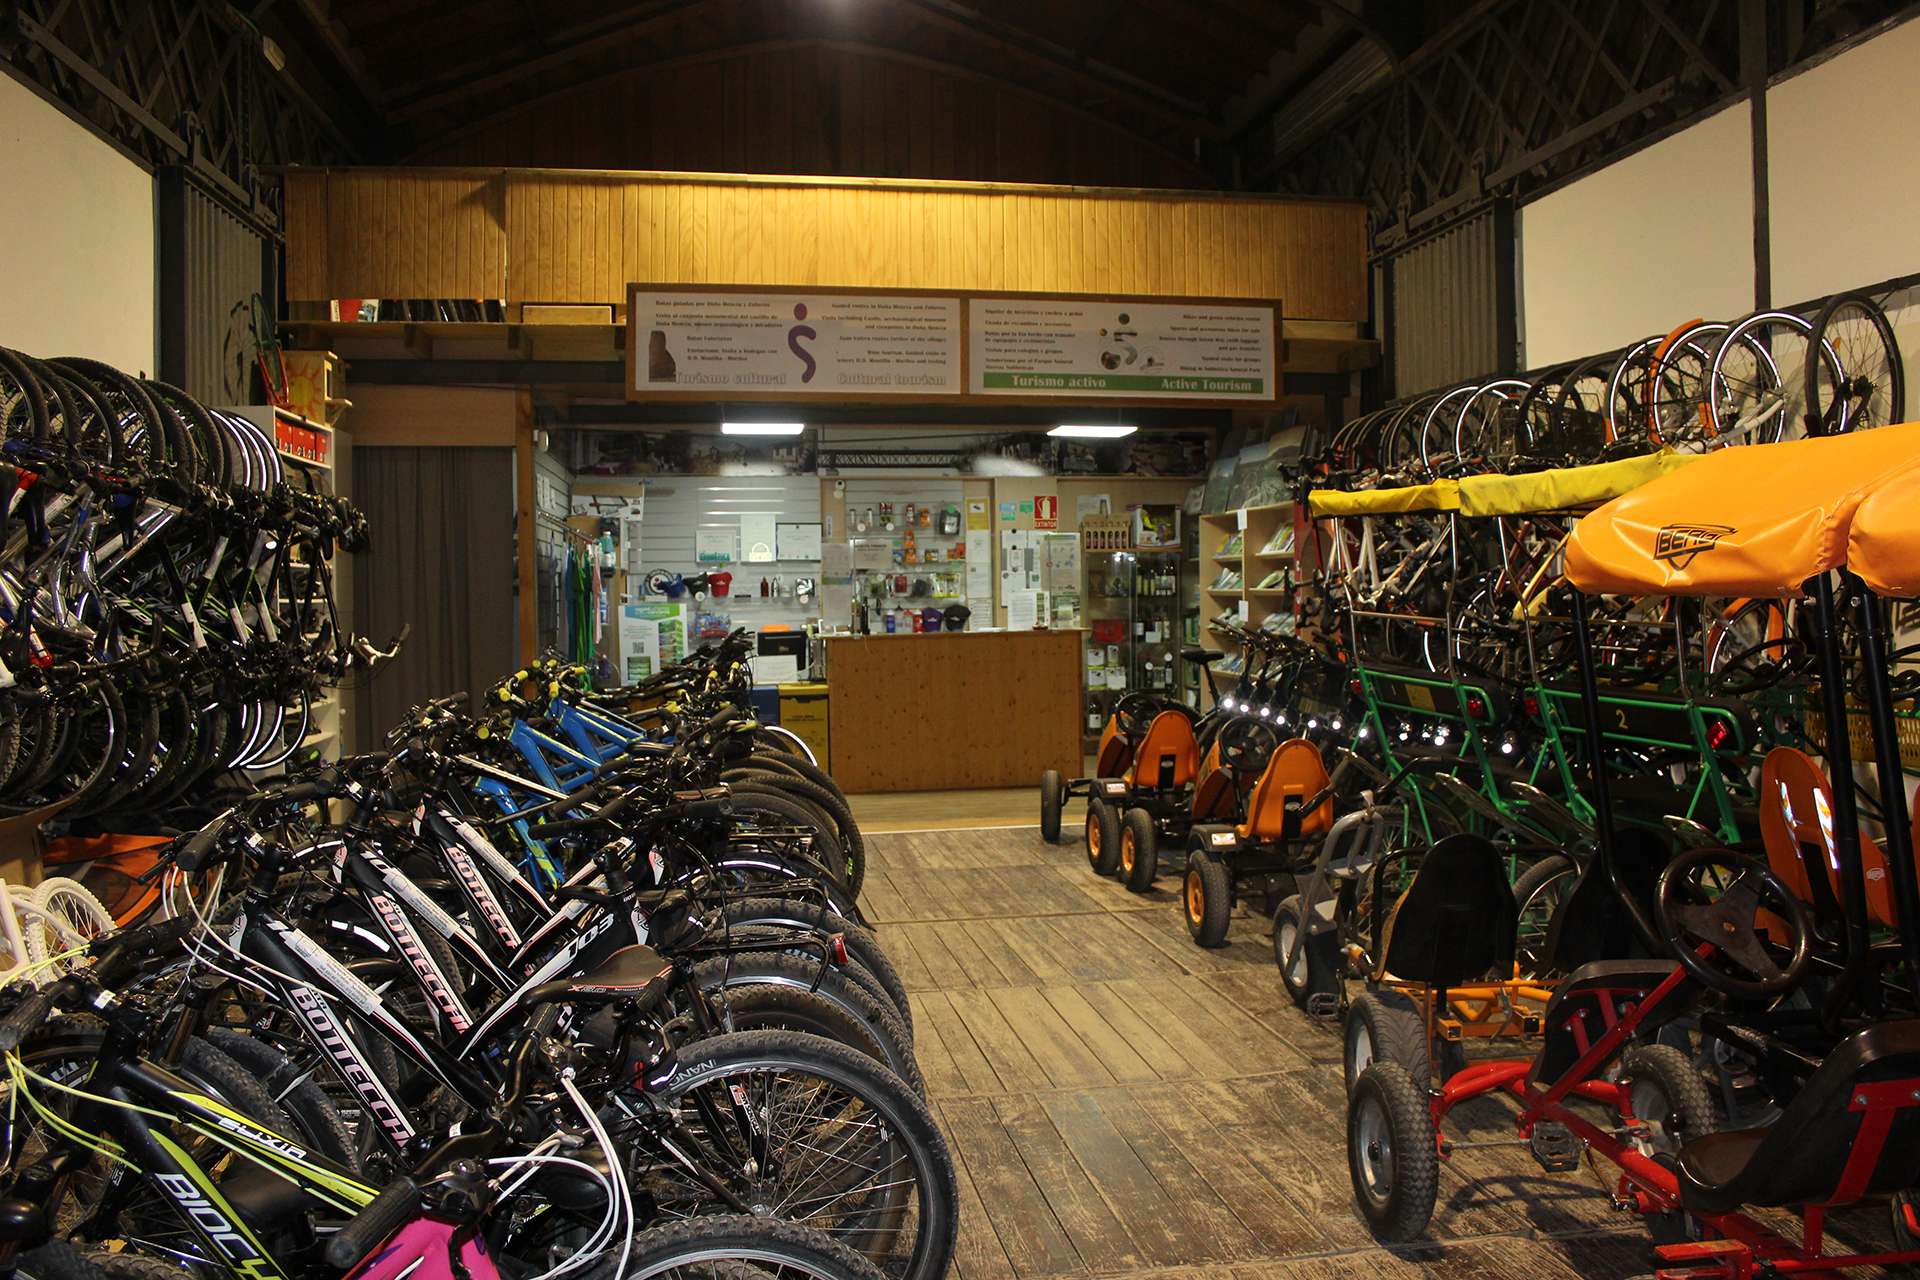 Centro cicloturista Subbética